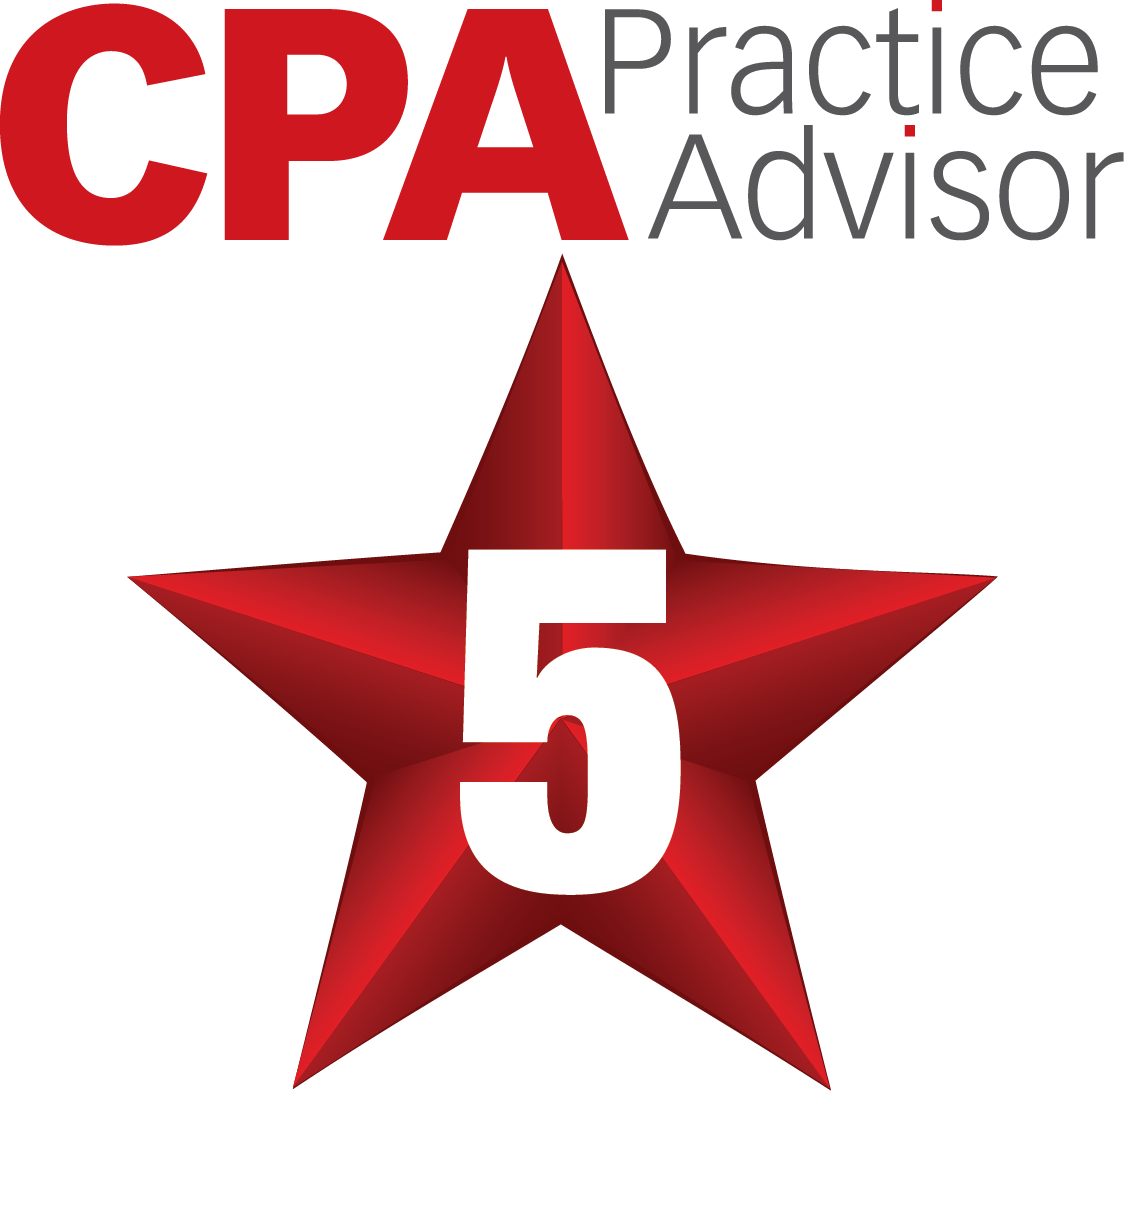 2018 CPA Practice Advisor 5 star rating